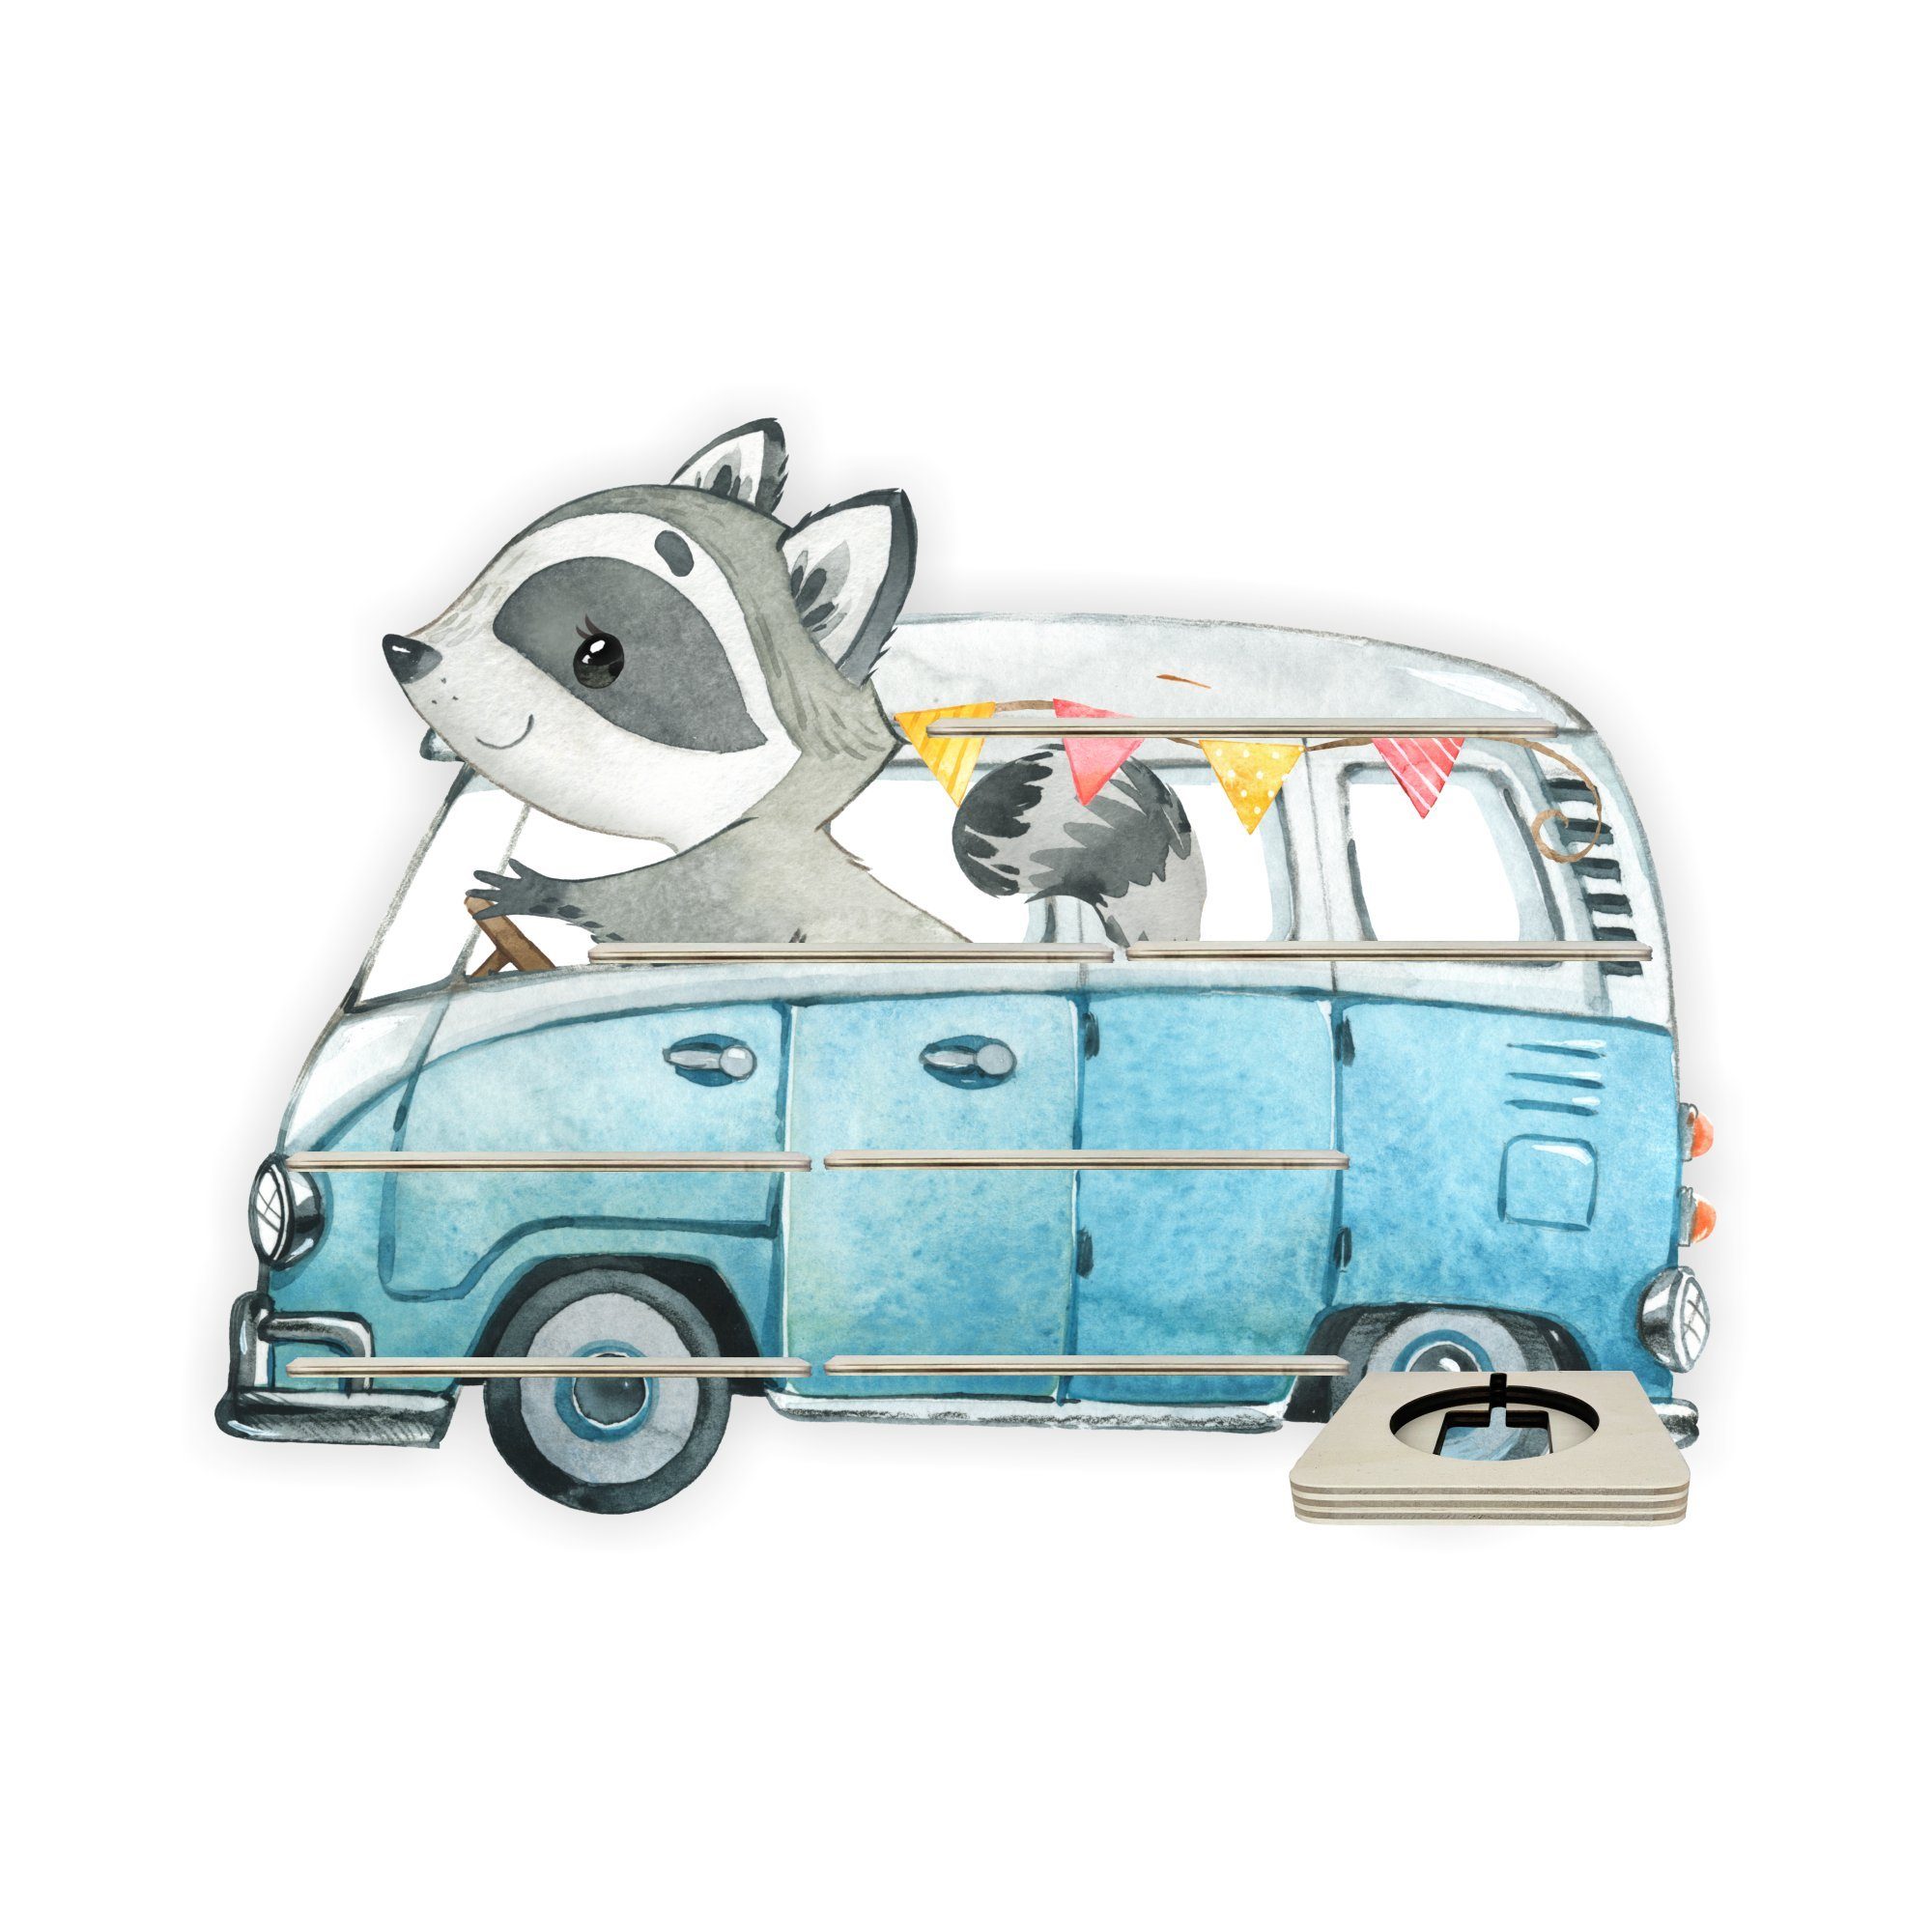 Farbklecks Collection ® Wandregal Regal für Musikbox - Auto Freunde Bus Waschbär